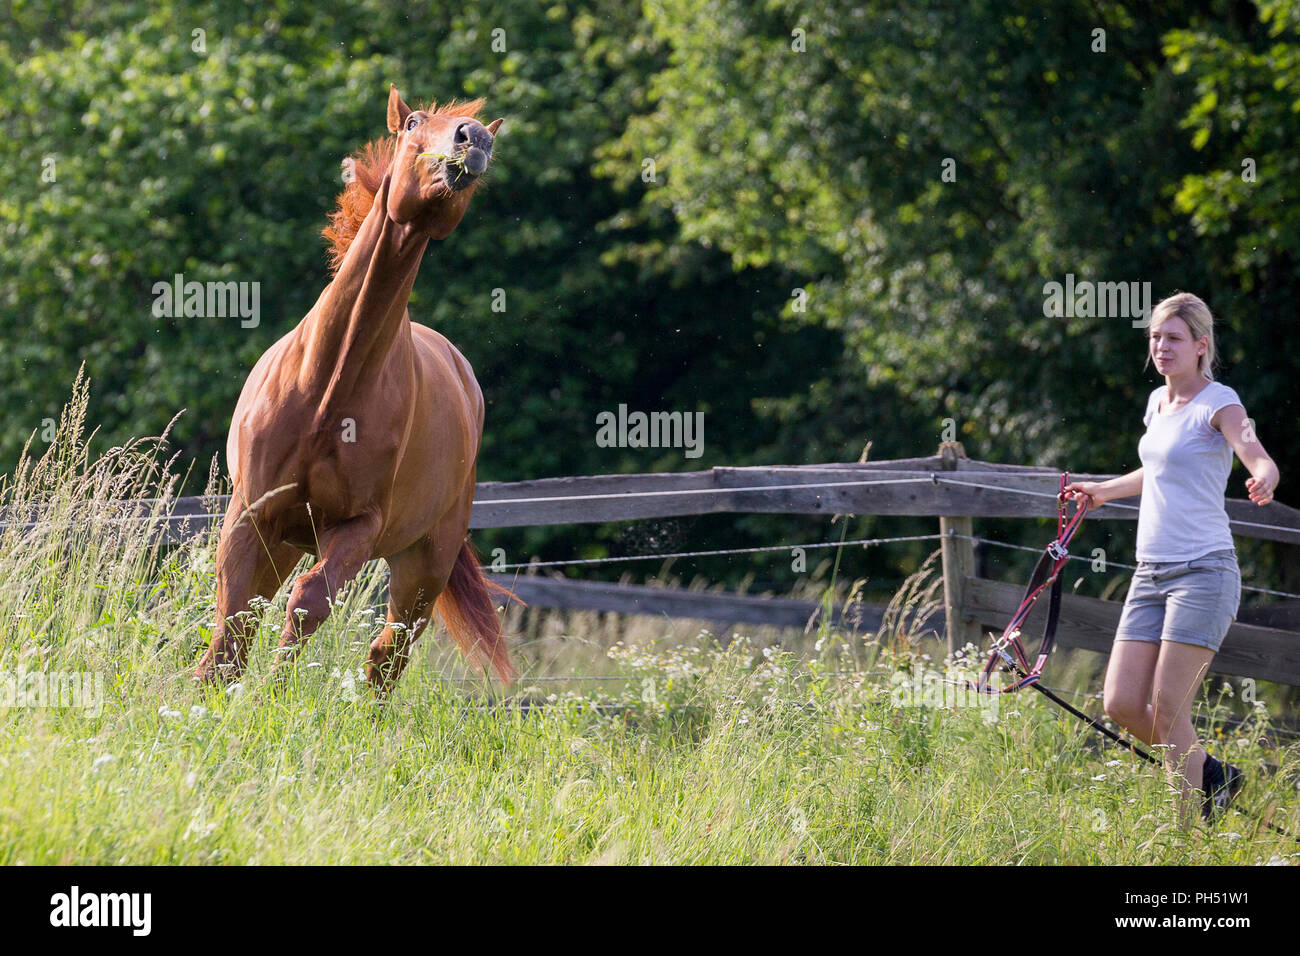 Austrian Warmblood. Woman trying to catch hestnut gelding on a pasture. Austria Stock Photo